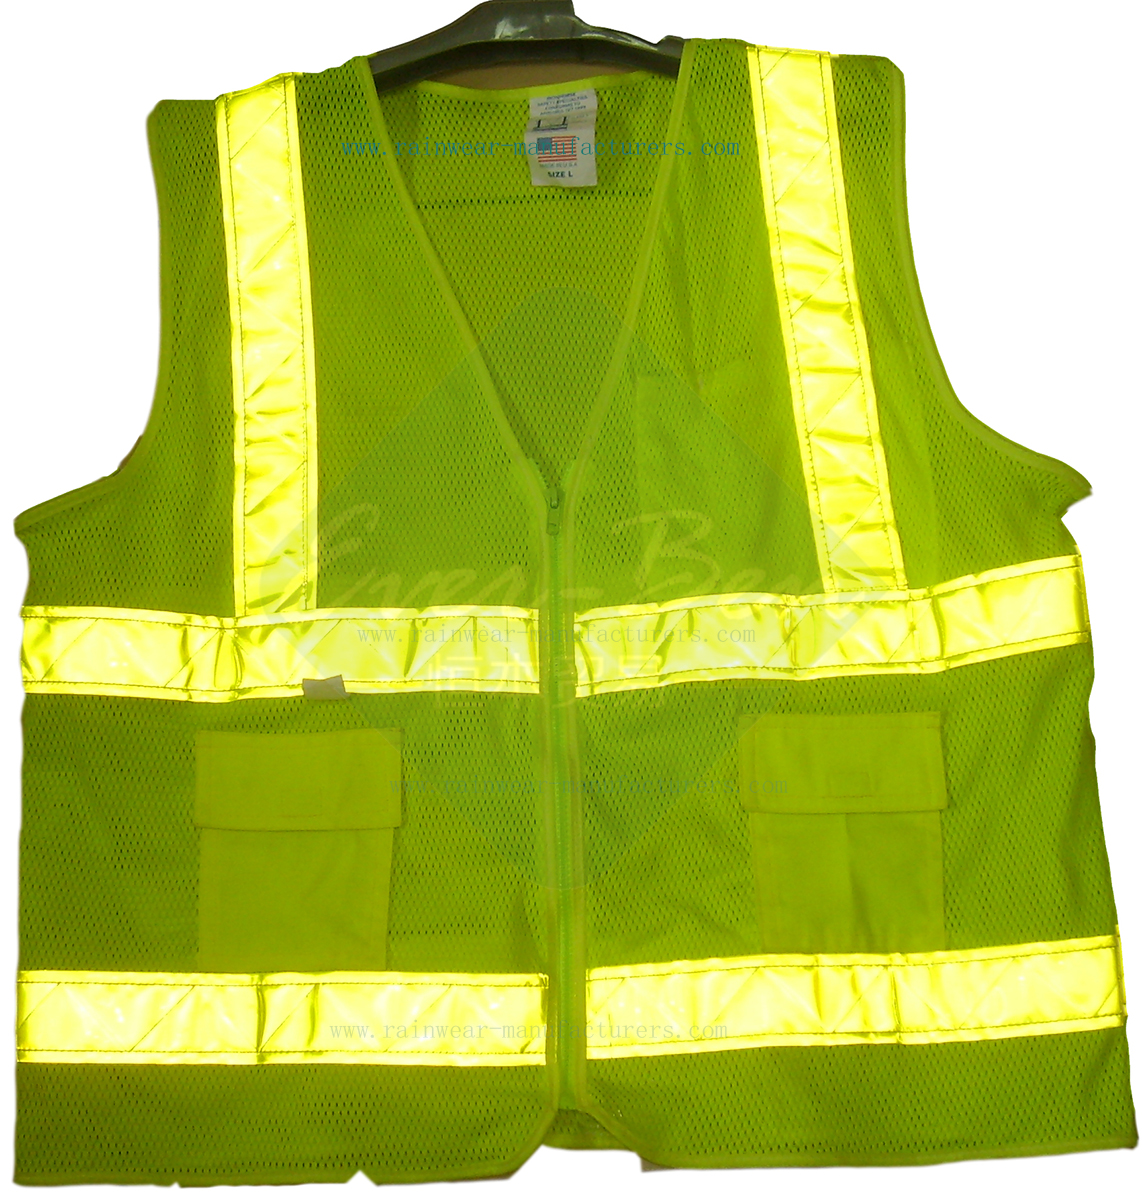 Reflective Vest-019 Disposable PVC Safety Vest|China Ever Ben ...